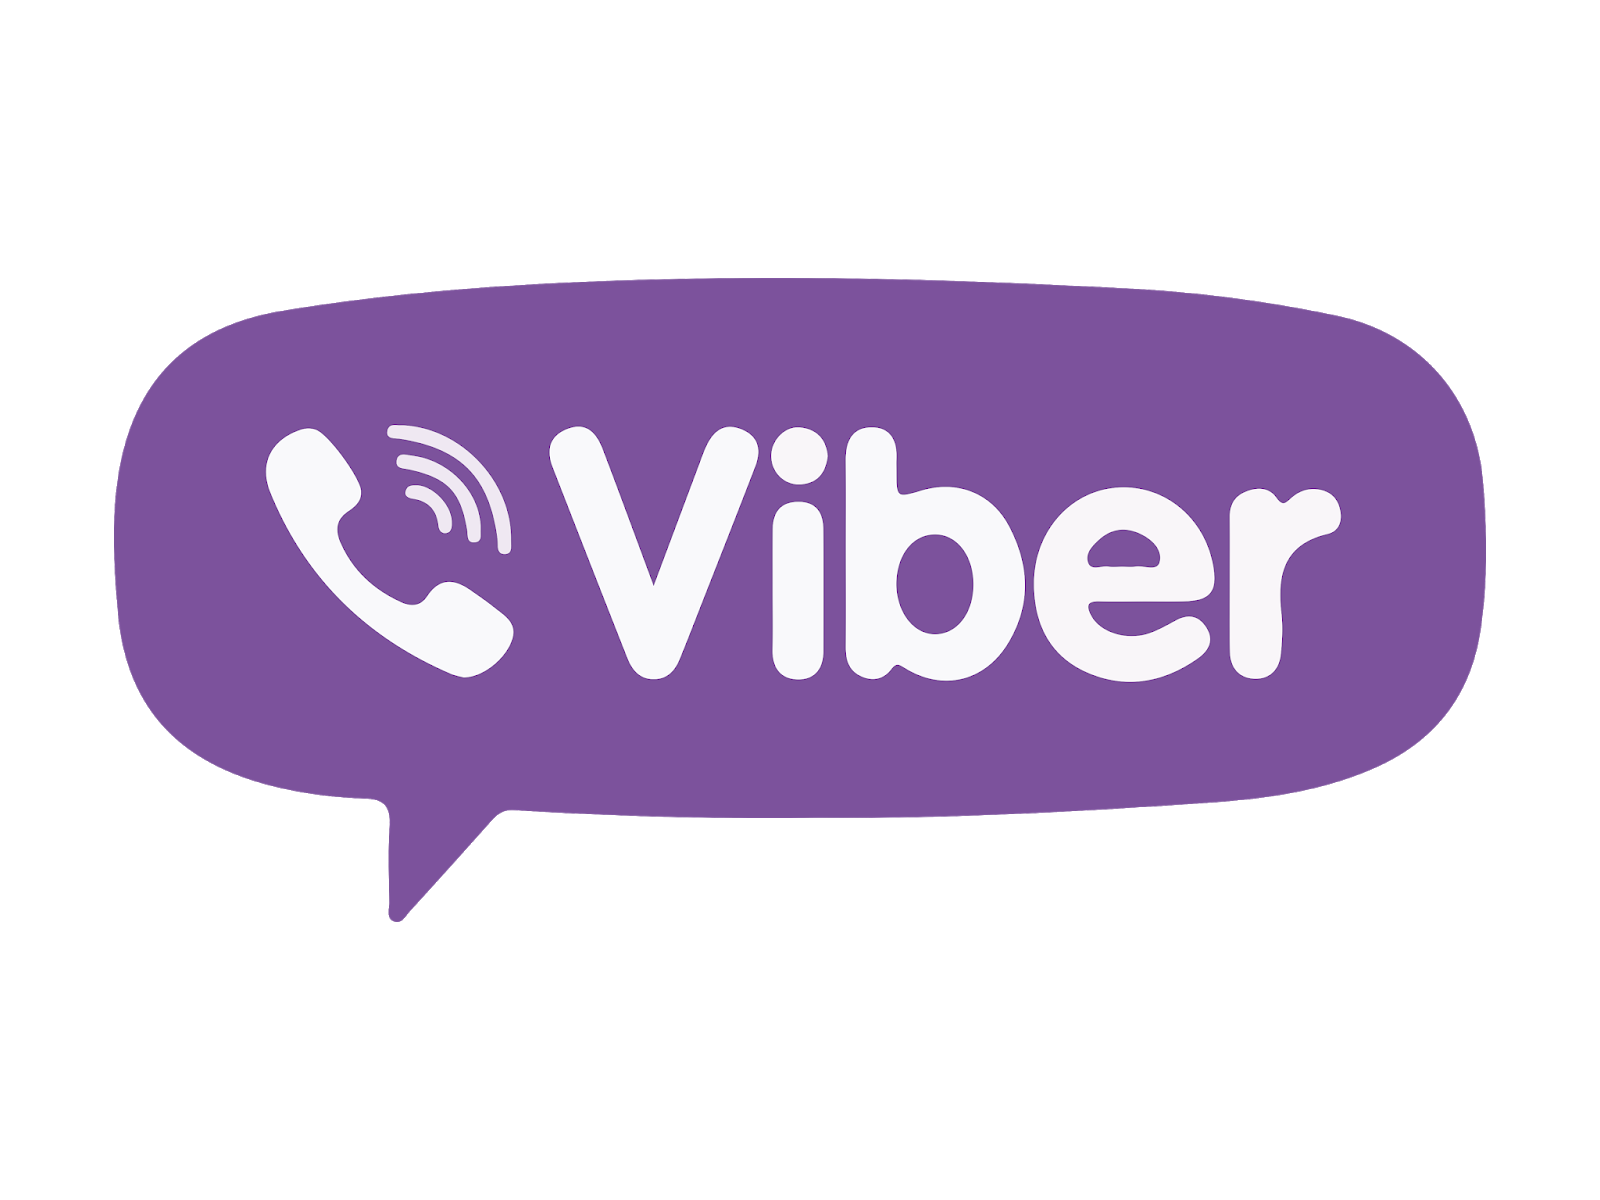 Viber 6. Viber. Viber логотип. Логотип Viber WHATSAPP. Икона вайбер.